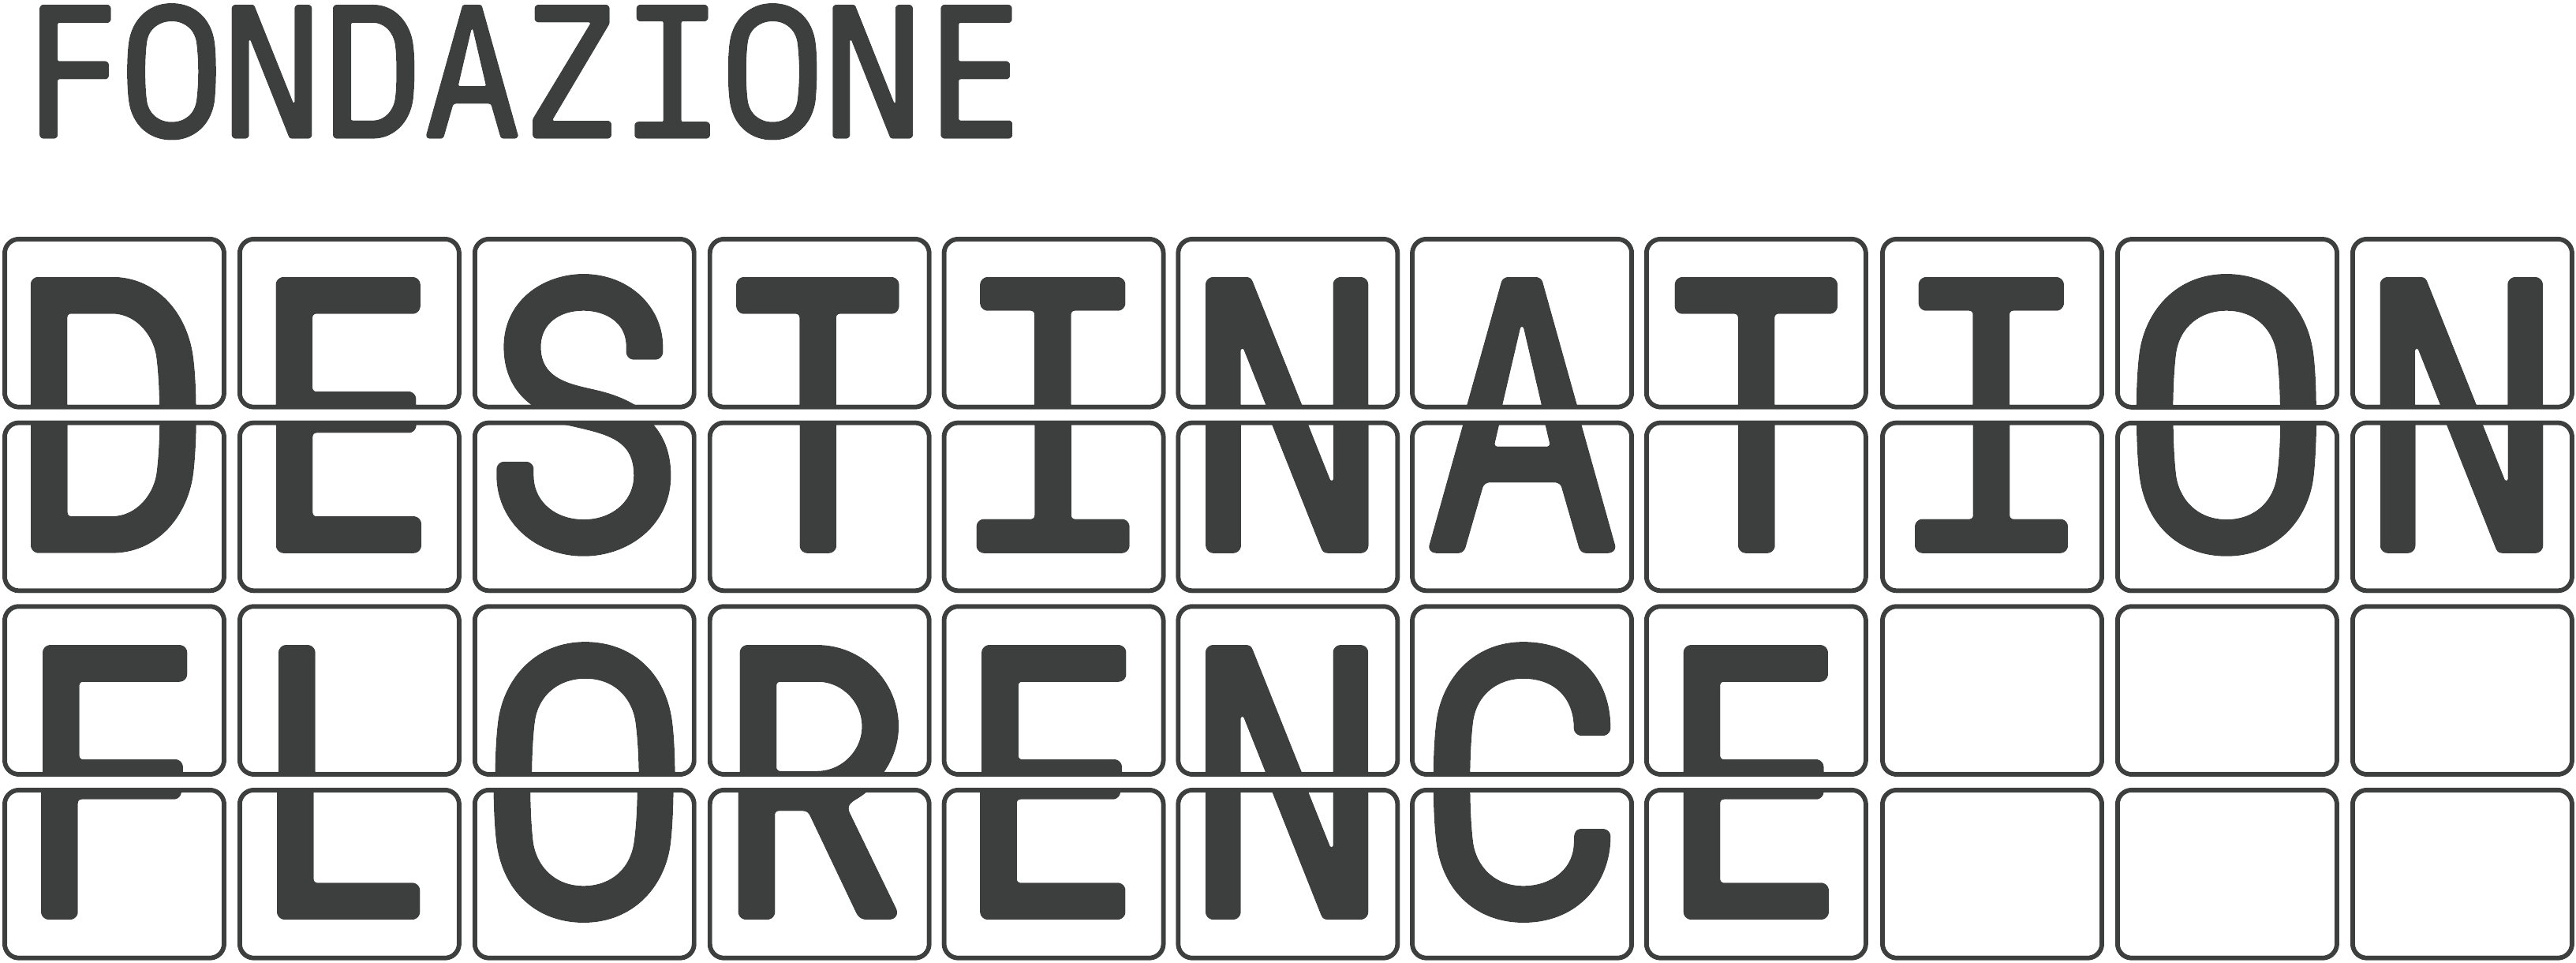 Fondazione Destination Florence - Logo